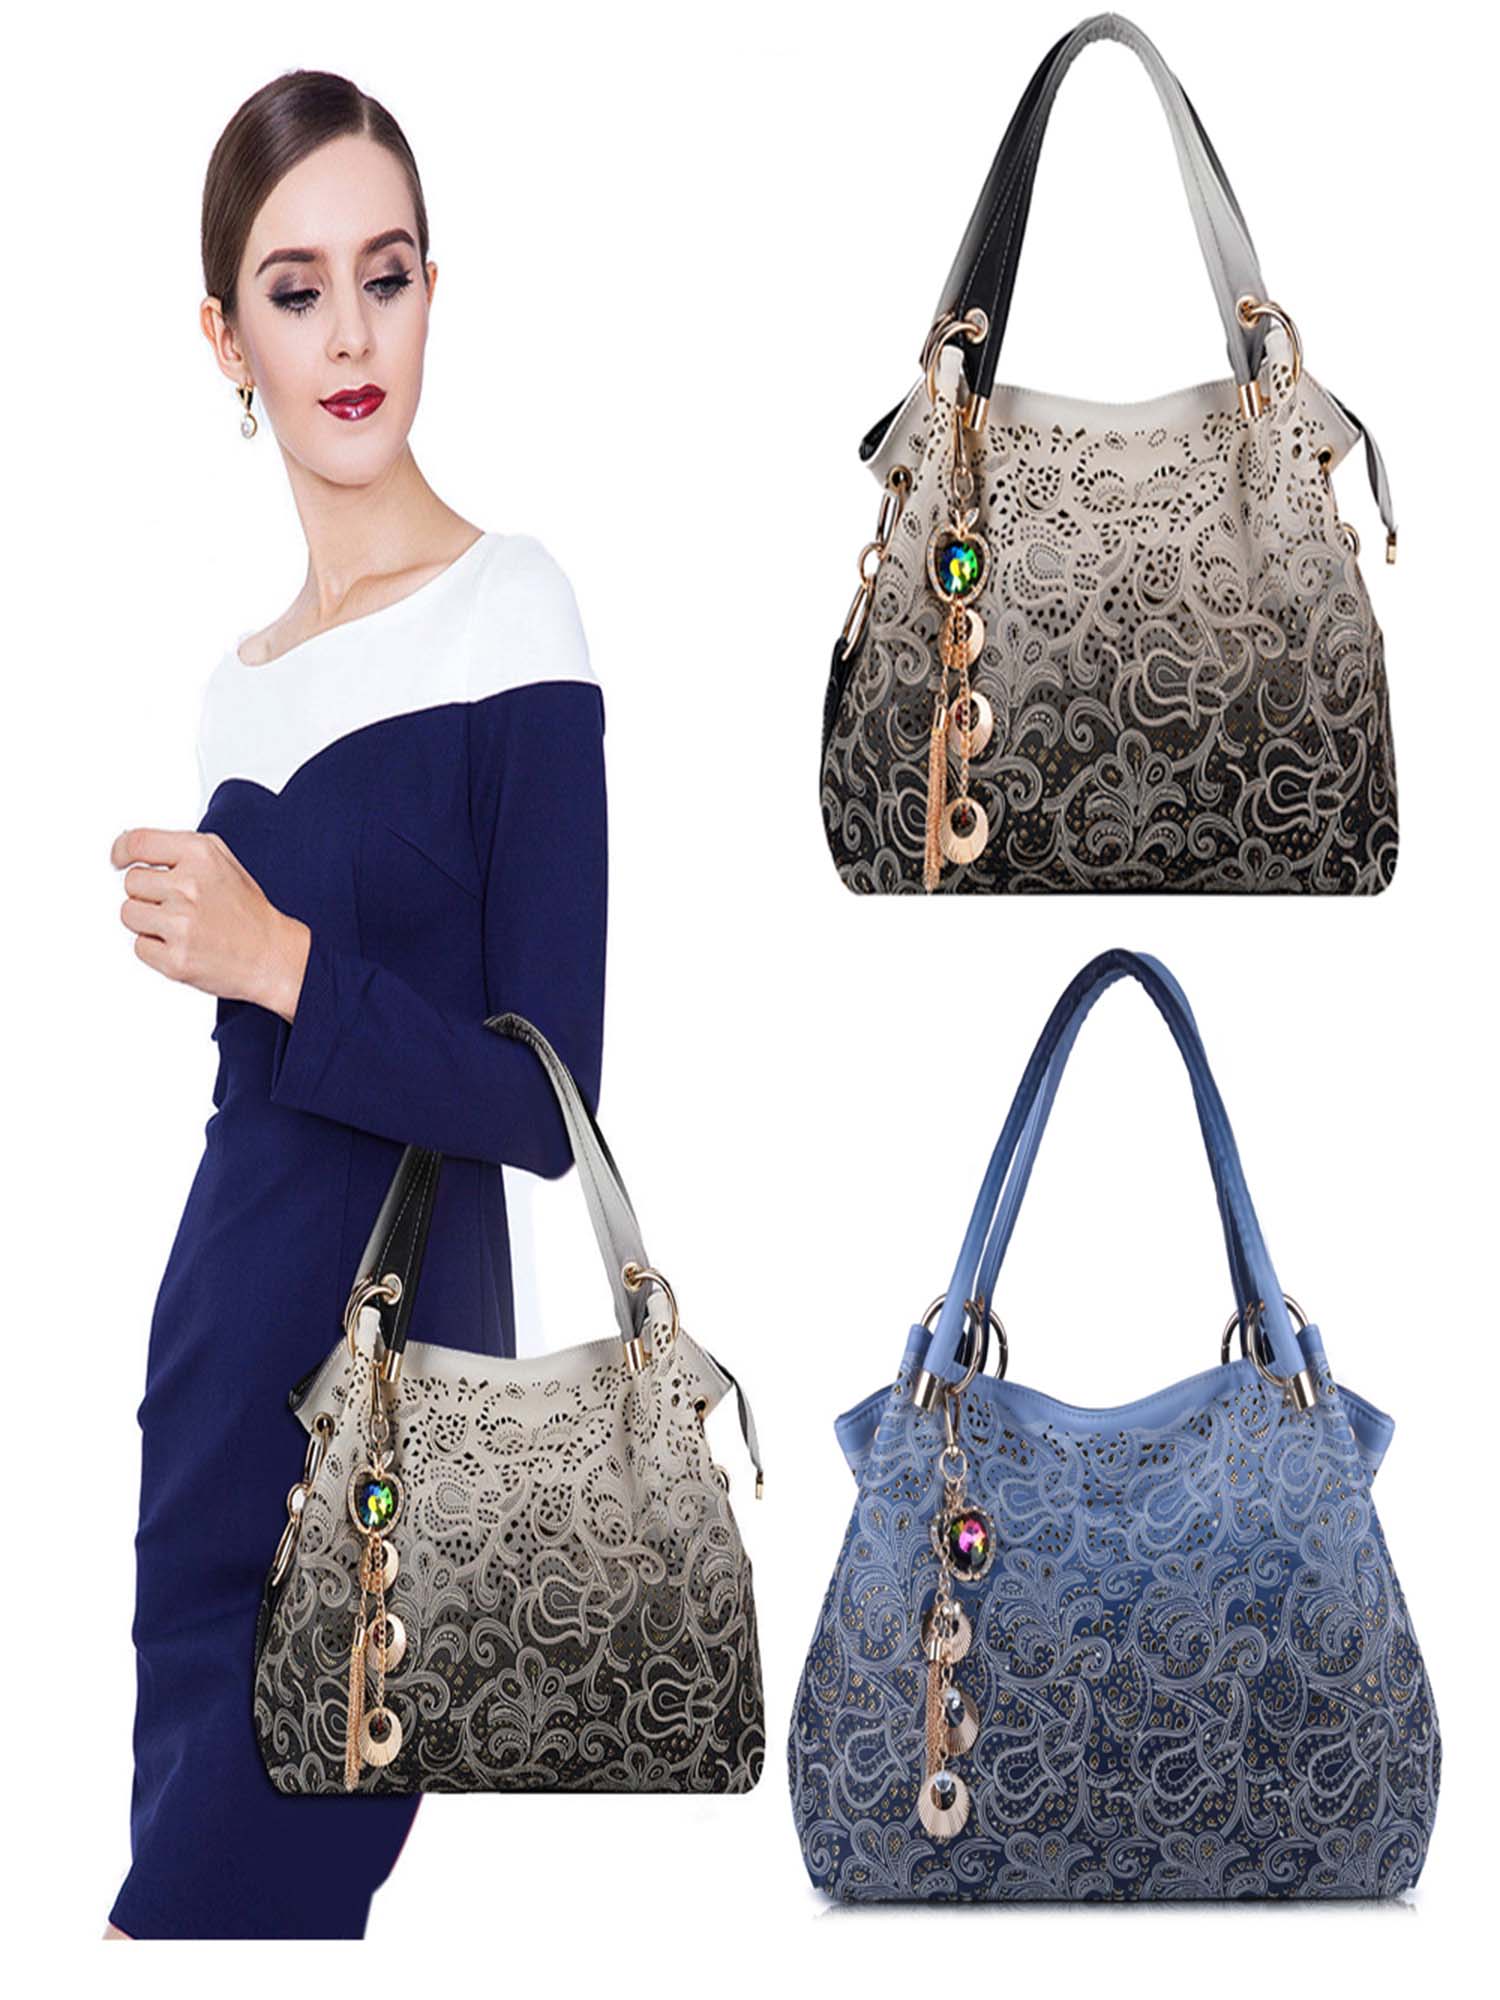 Handbags for Women, Peaoy Faux Leather Purse Ladies Handbag Vintage Designer Handbags Shoulder Bag Hollow Out Design with Fine Pendant Fashion Tote Bag - image 4 of 8